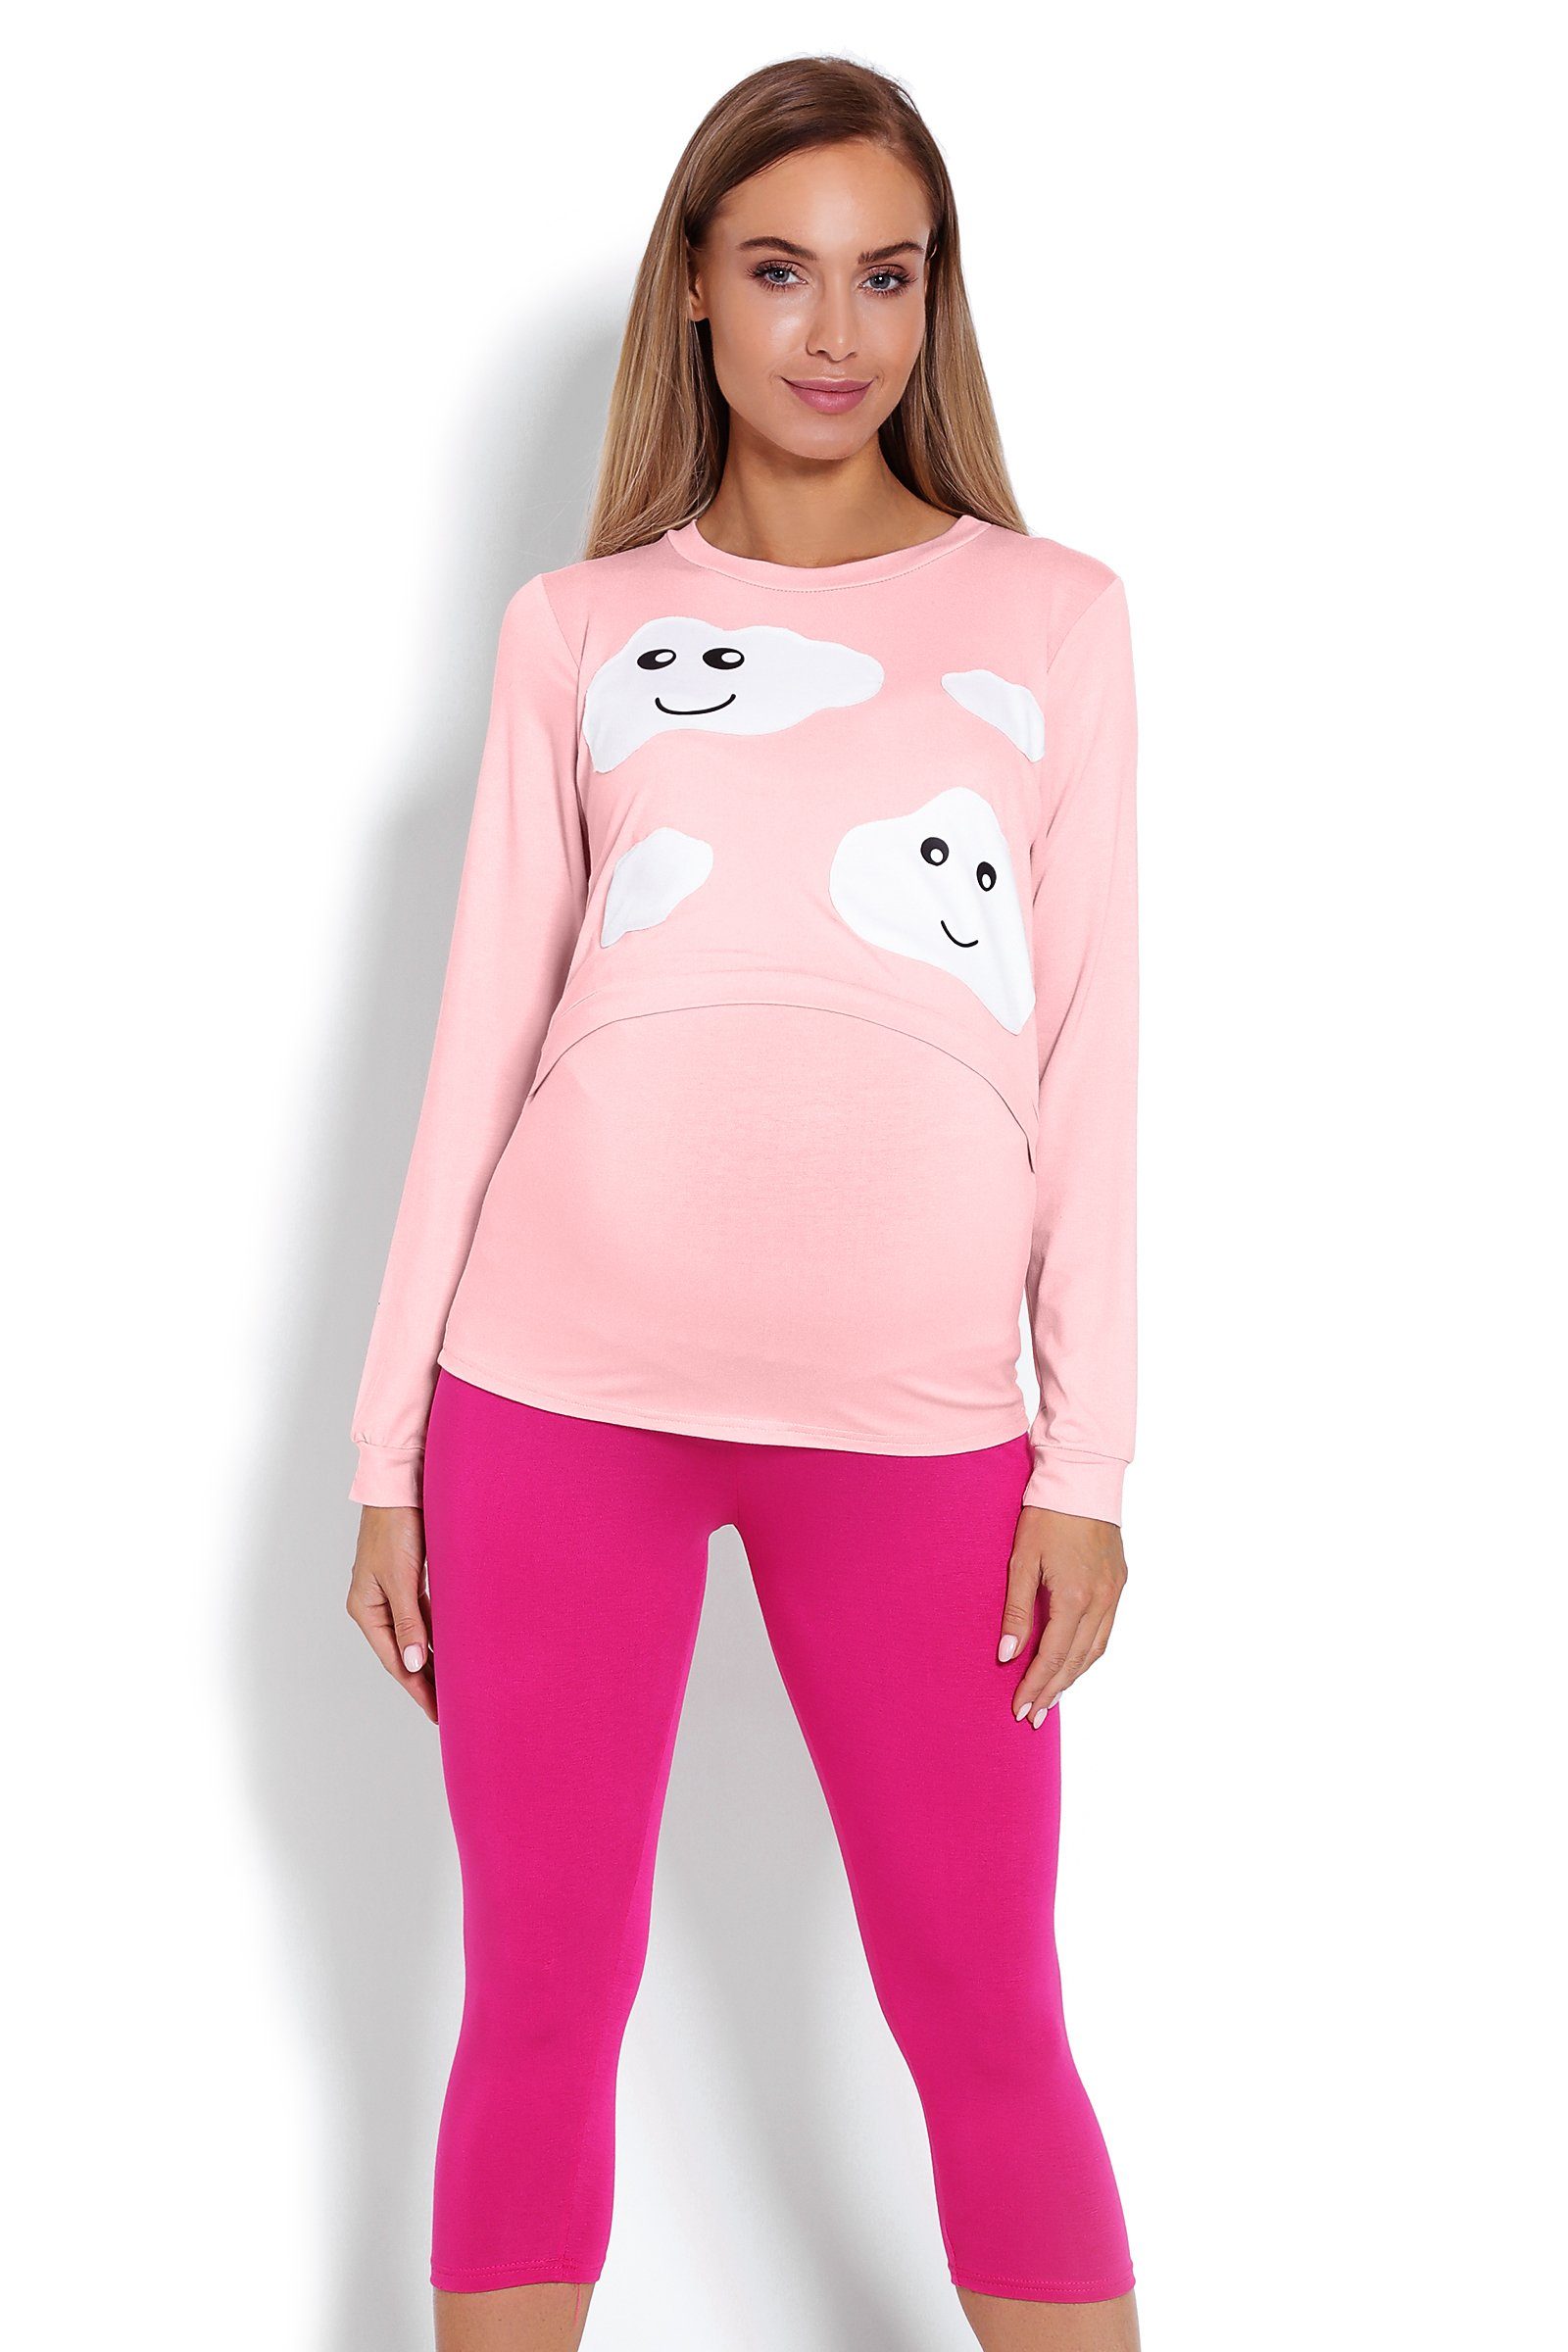 PeeKaBoo Umstandspyjama Schlafanzug Stillen Schwangerschaft Stillschlafanzug rosa/pink